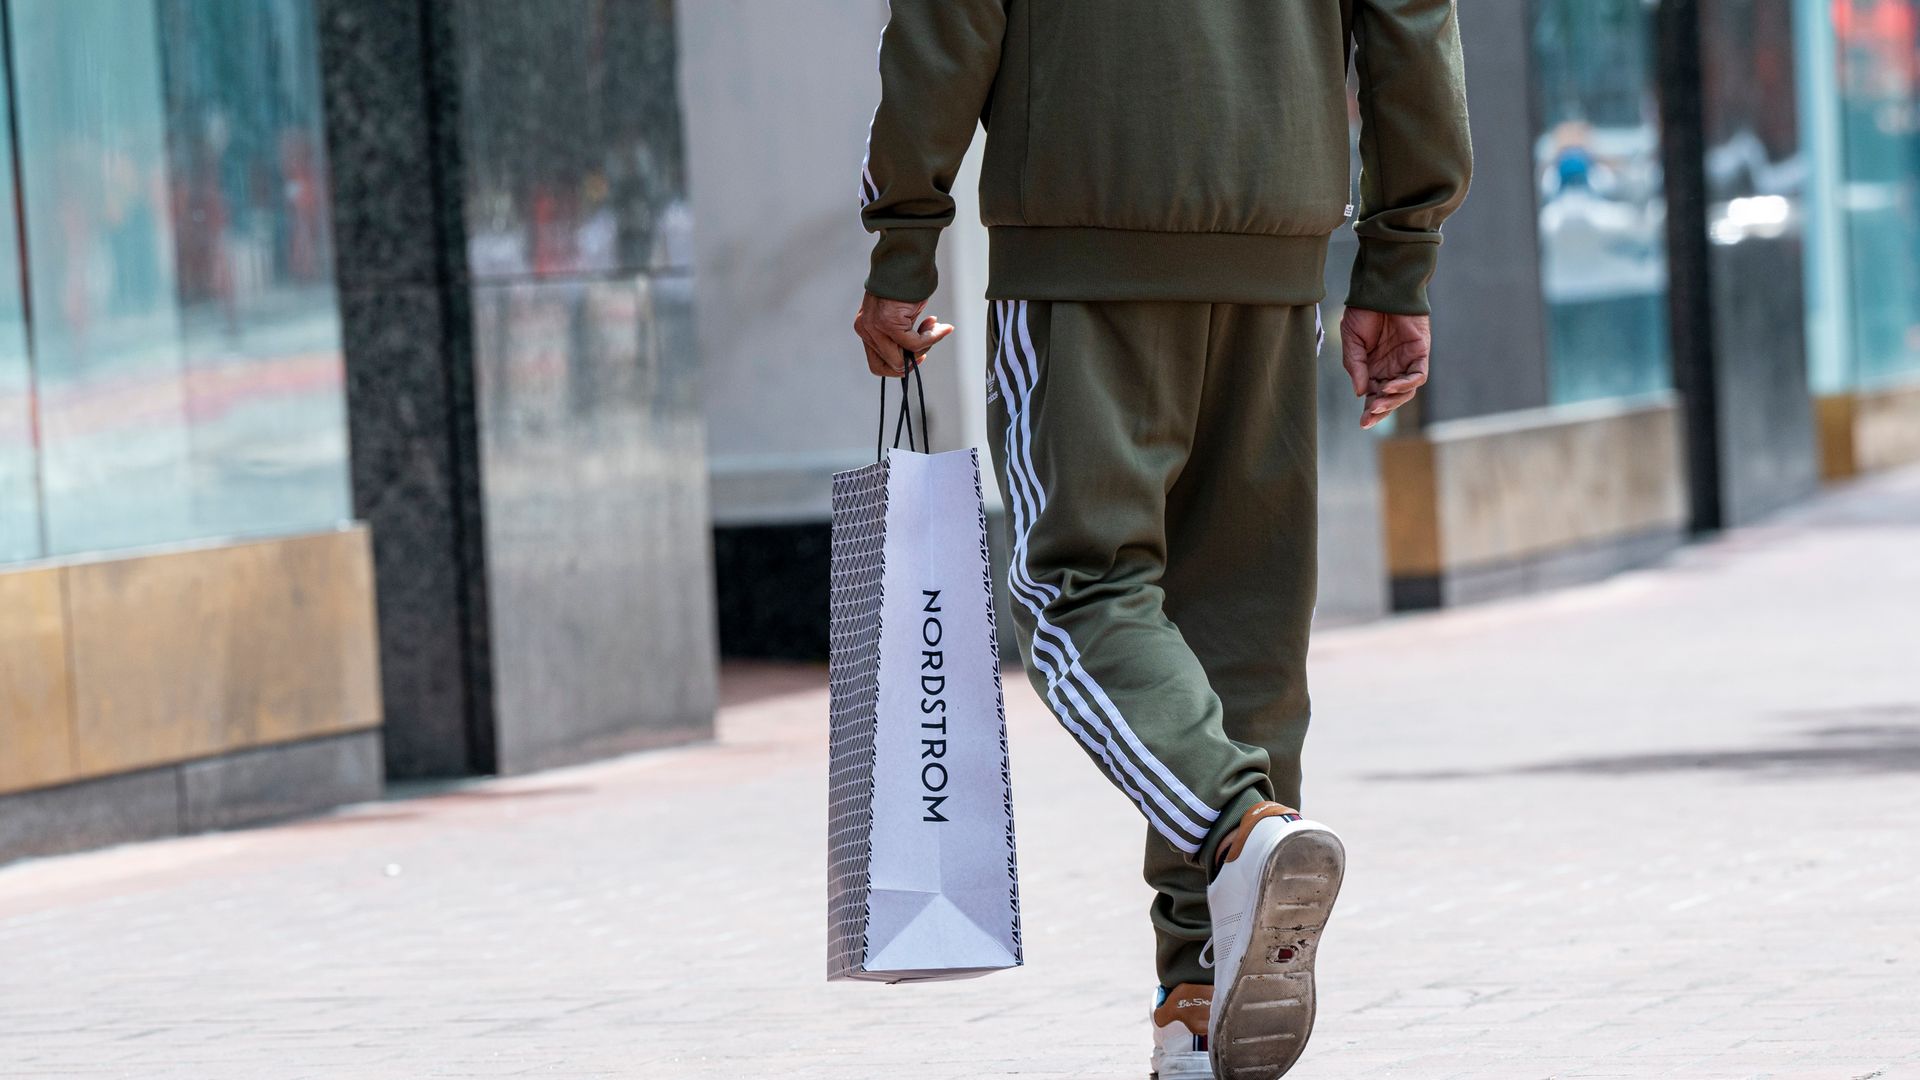 shopper holding a Nordstrom shopping bag